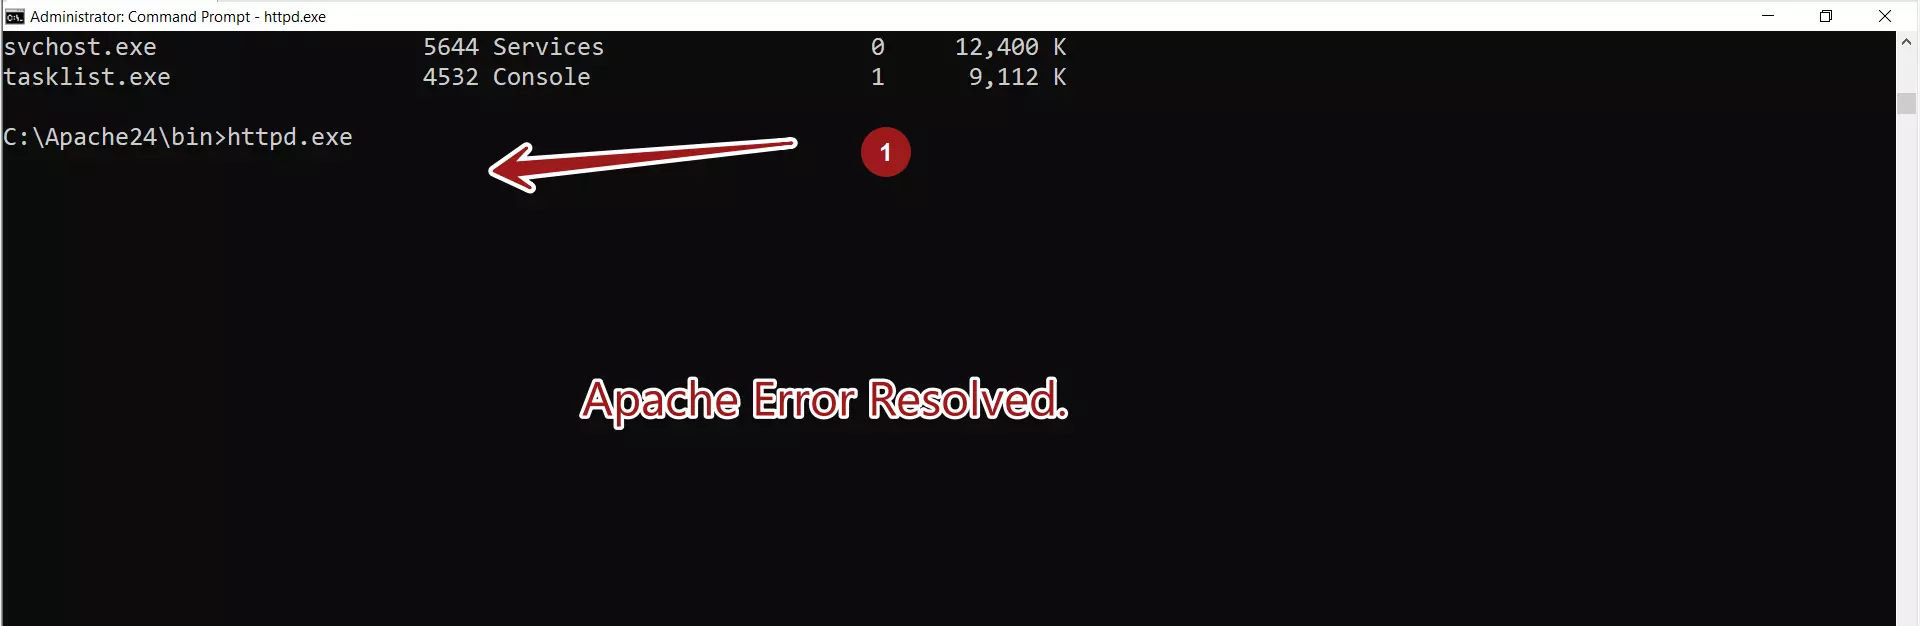 Apache Error Resolved